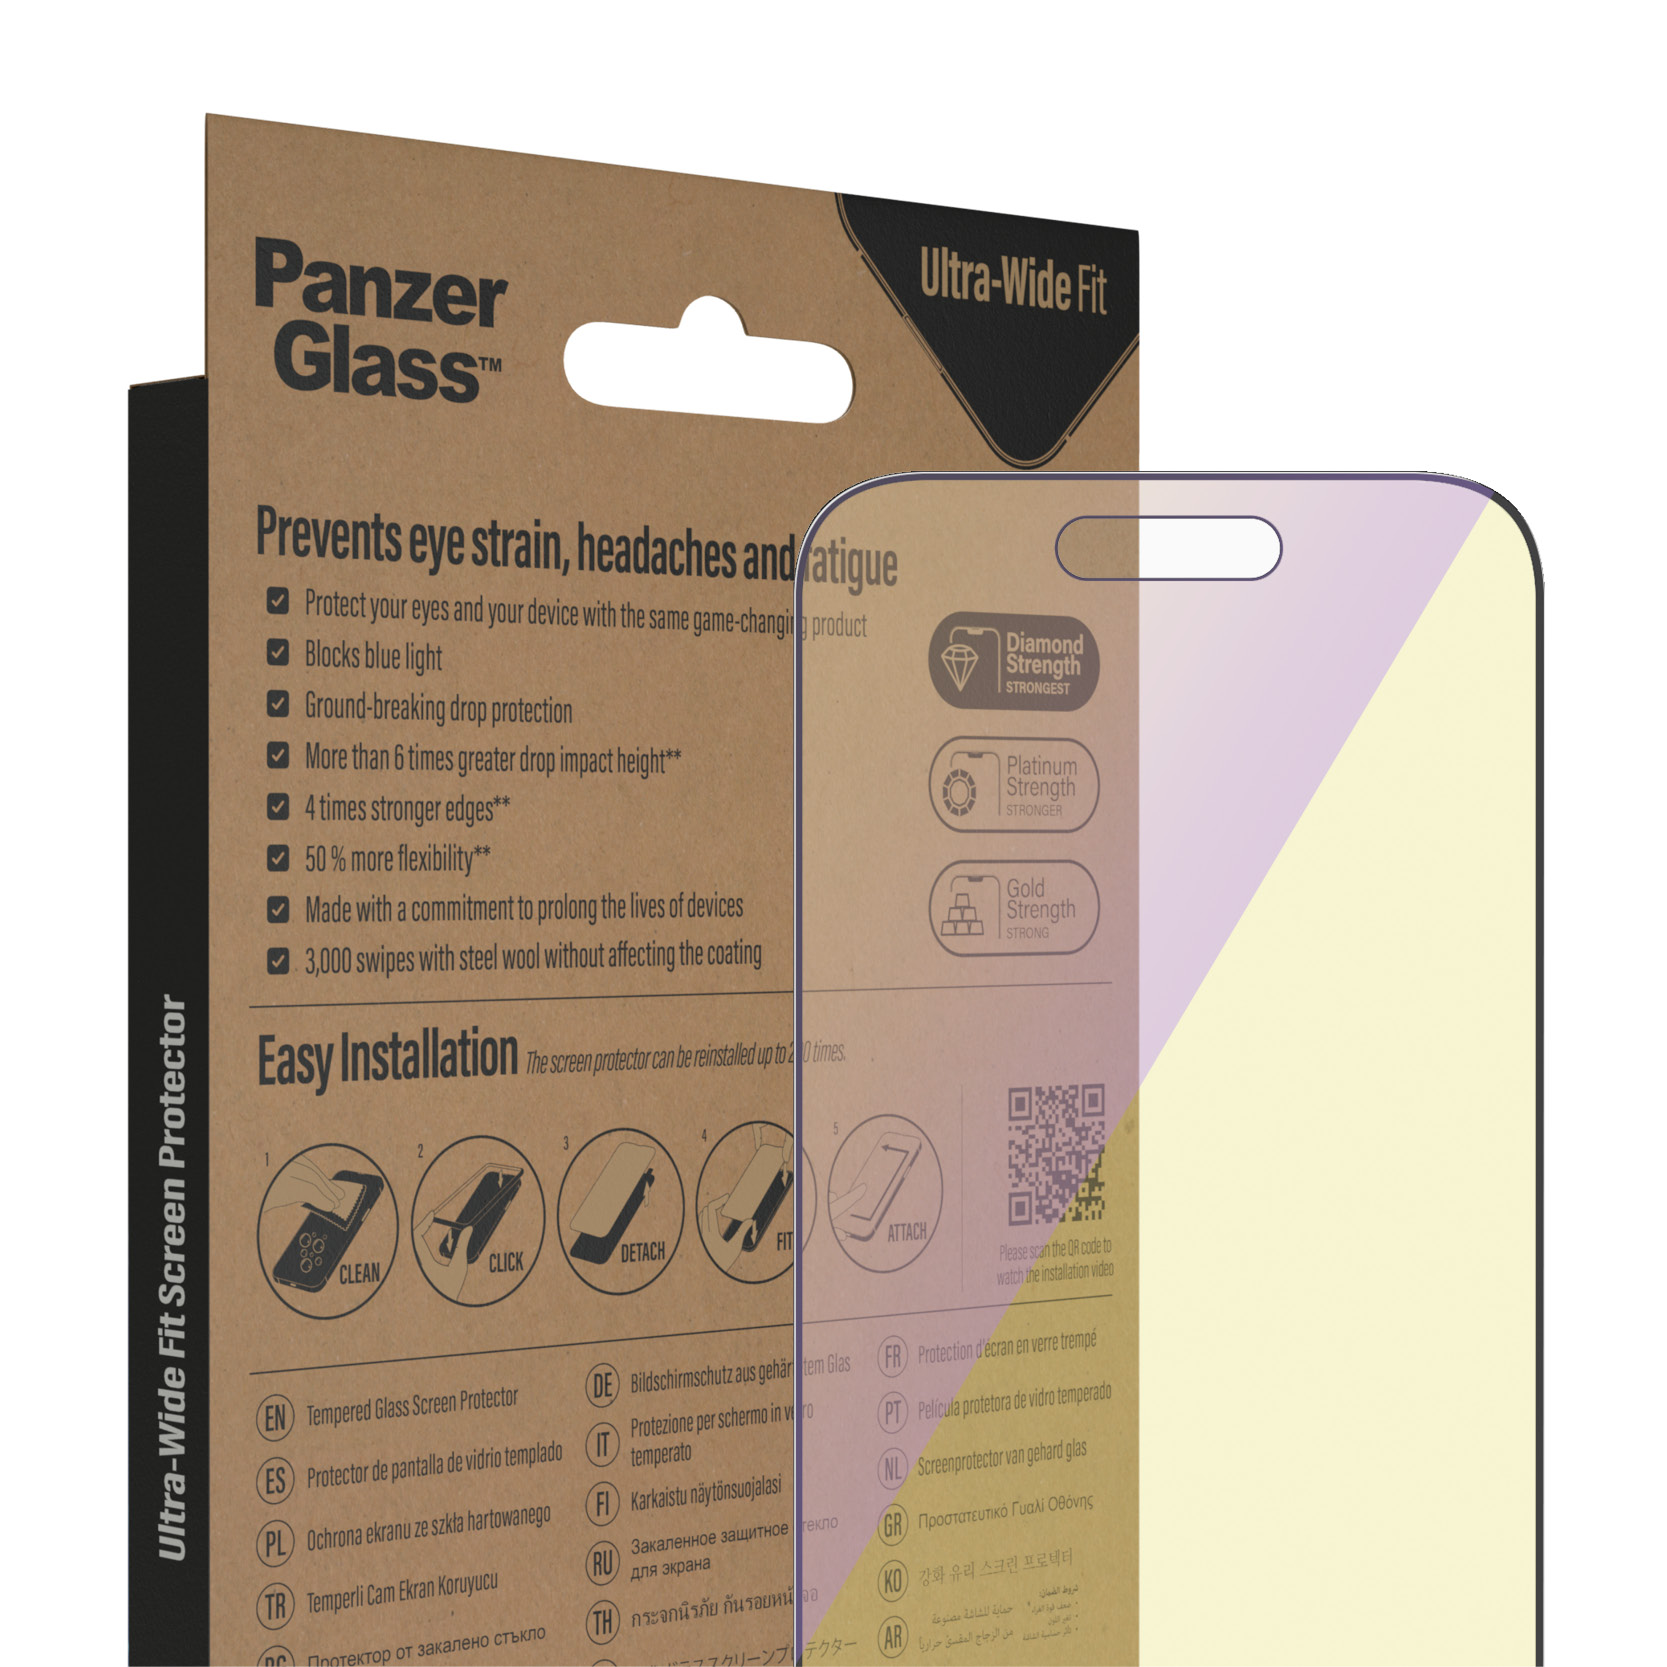 Protector de ecran PanzerGlass anti-lumina albastra Apple iPhone 14 Pro | Potrivire ultra-larga cu. EasyAligner thumb